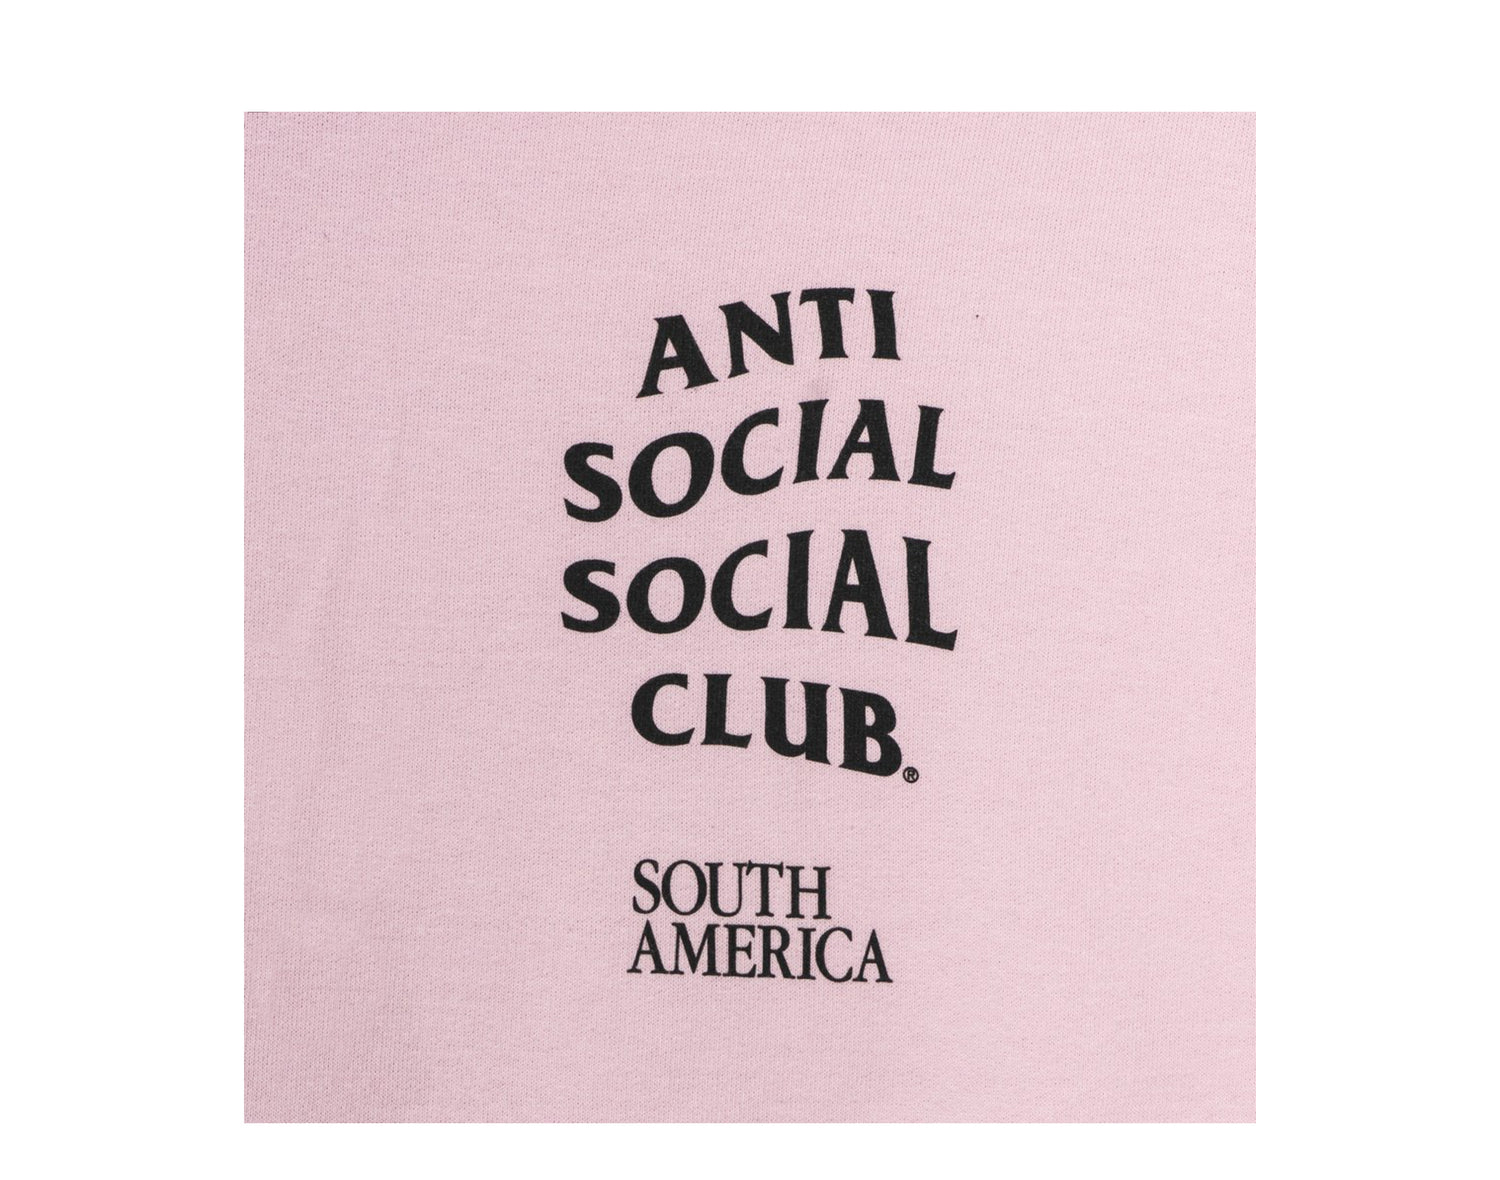 Anti Social Social Club South America Pink Hoodie